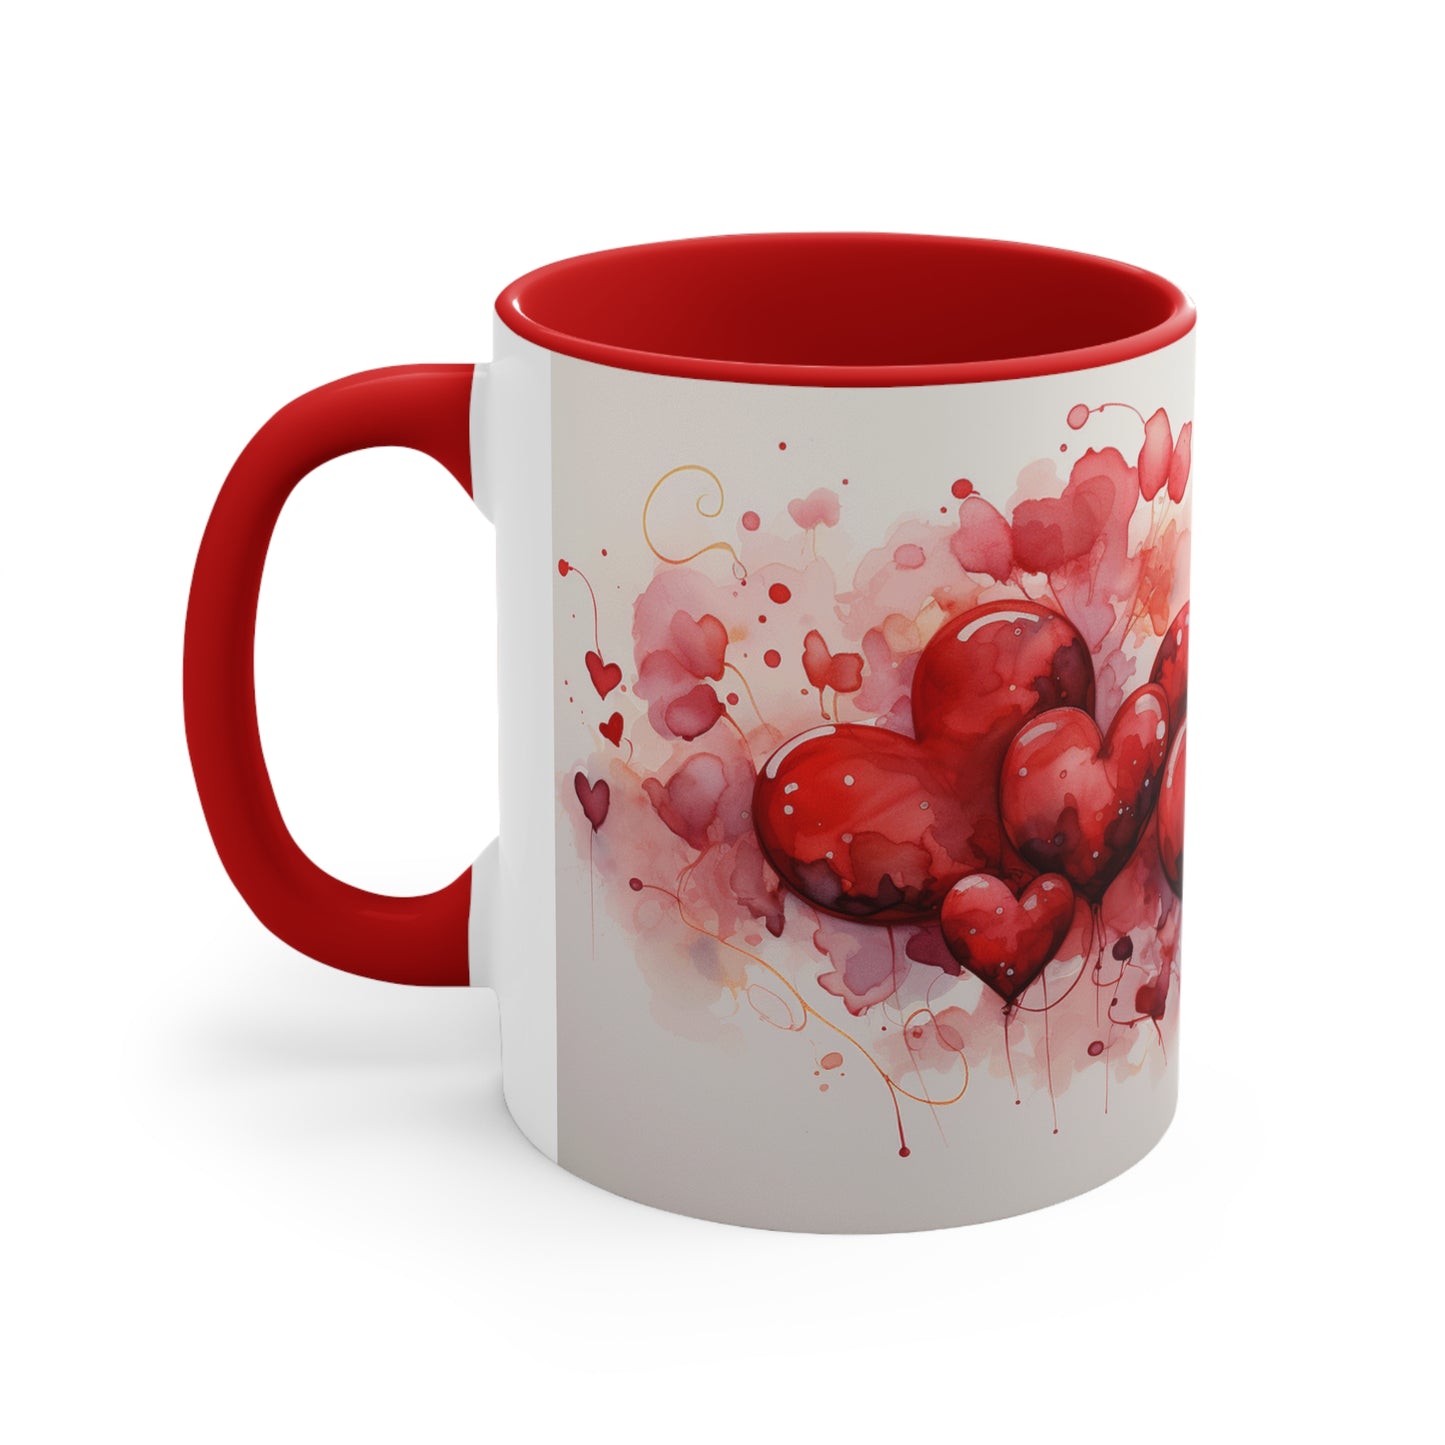 Cascade of Hearts mug, Valentine's Day, Accent Coffee Mug, 11oz mug, valentines gift, gift for her, be mine, heart mug, love you, couples